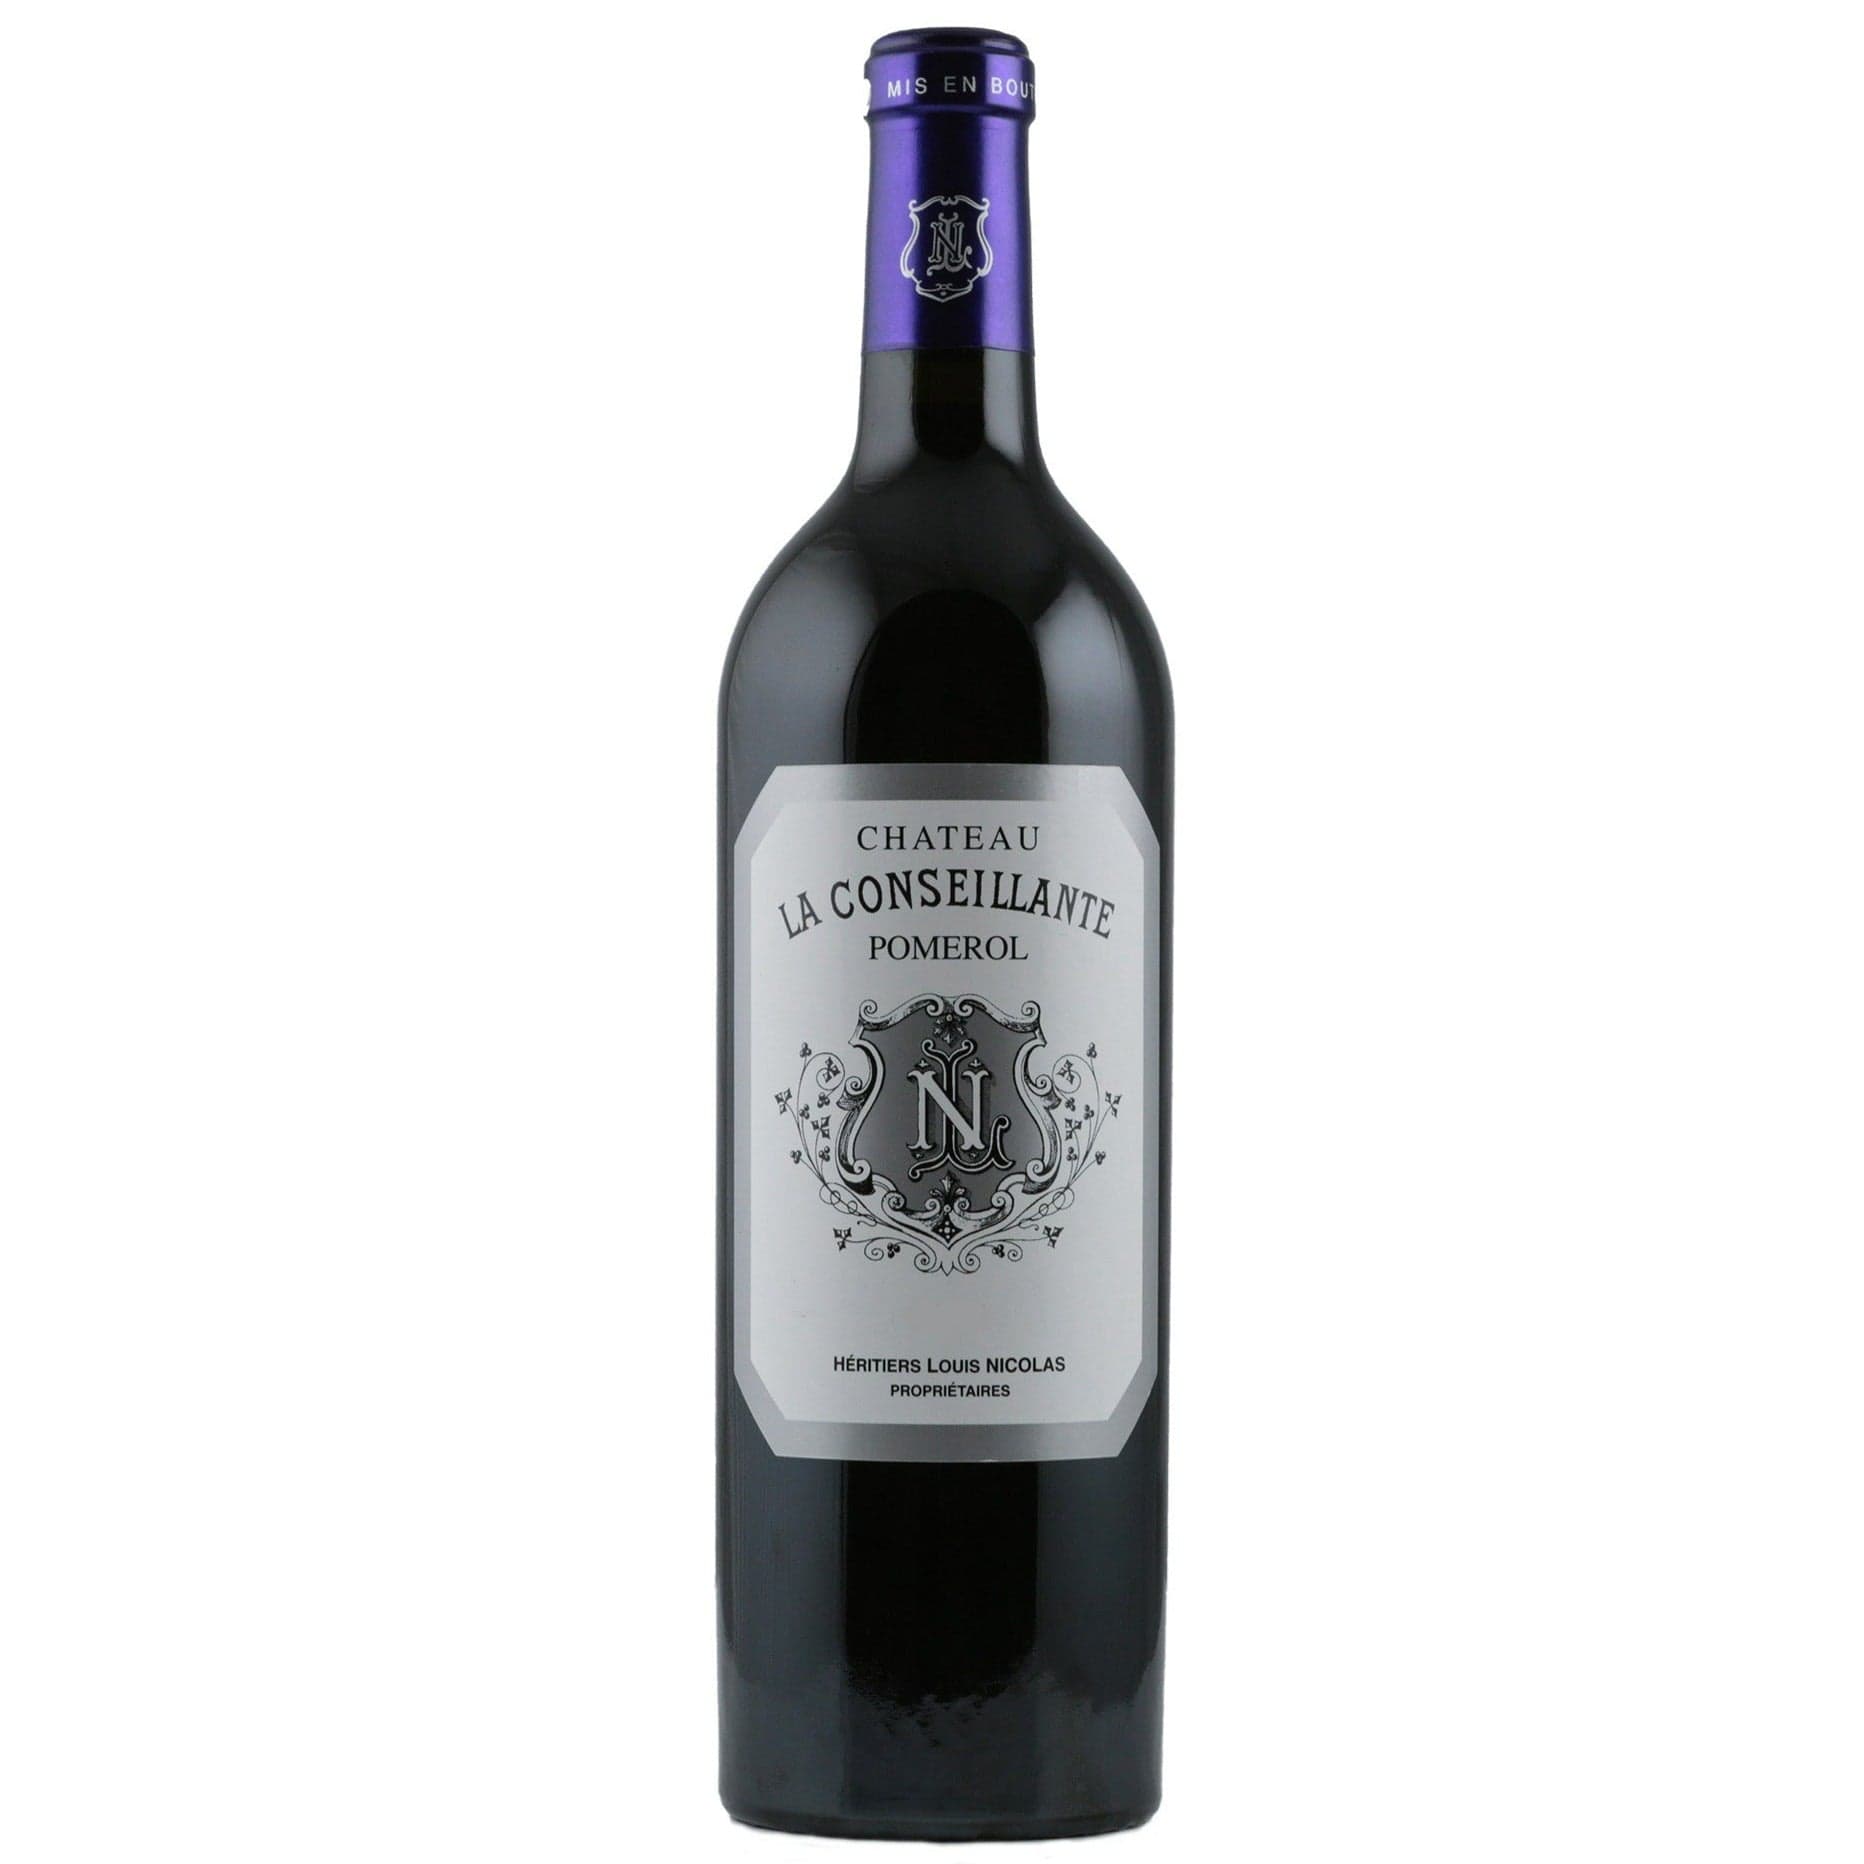 Single bottle of Red wine Ch. La Conseillante, Grand Vin, Pomerol, 2005 85% Merlot & 15% Cabernet Franc